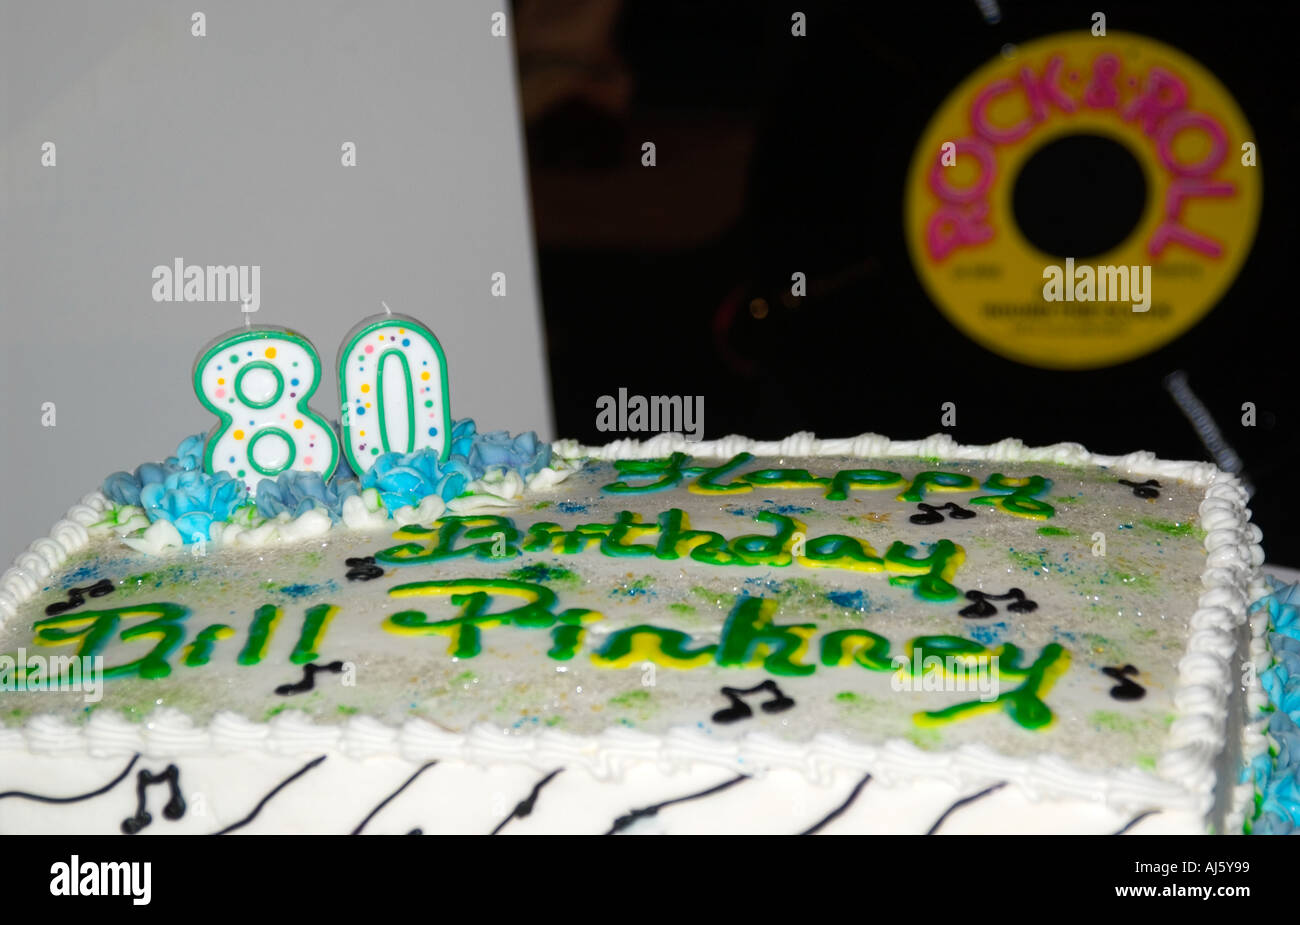 Stock photo showing Bill Pinkney 80th Birthday Cake Stock Photo - Alamy